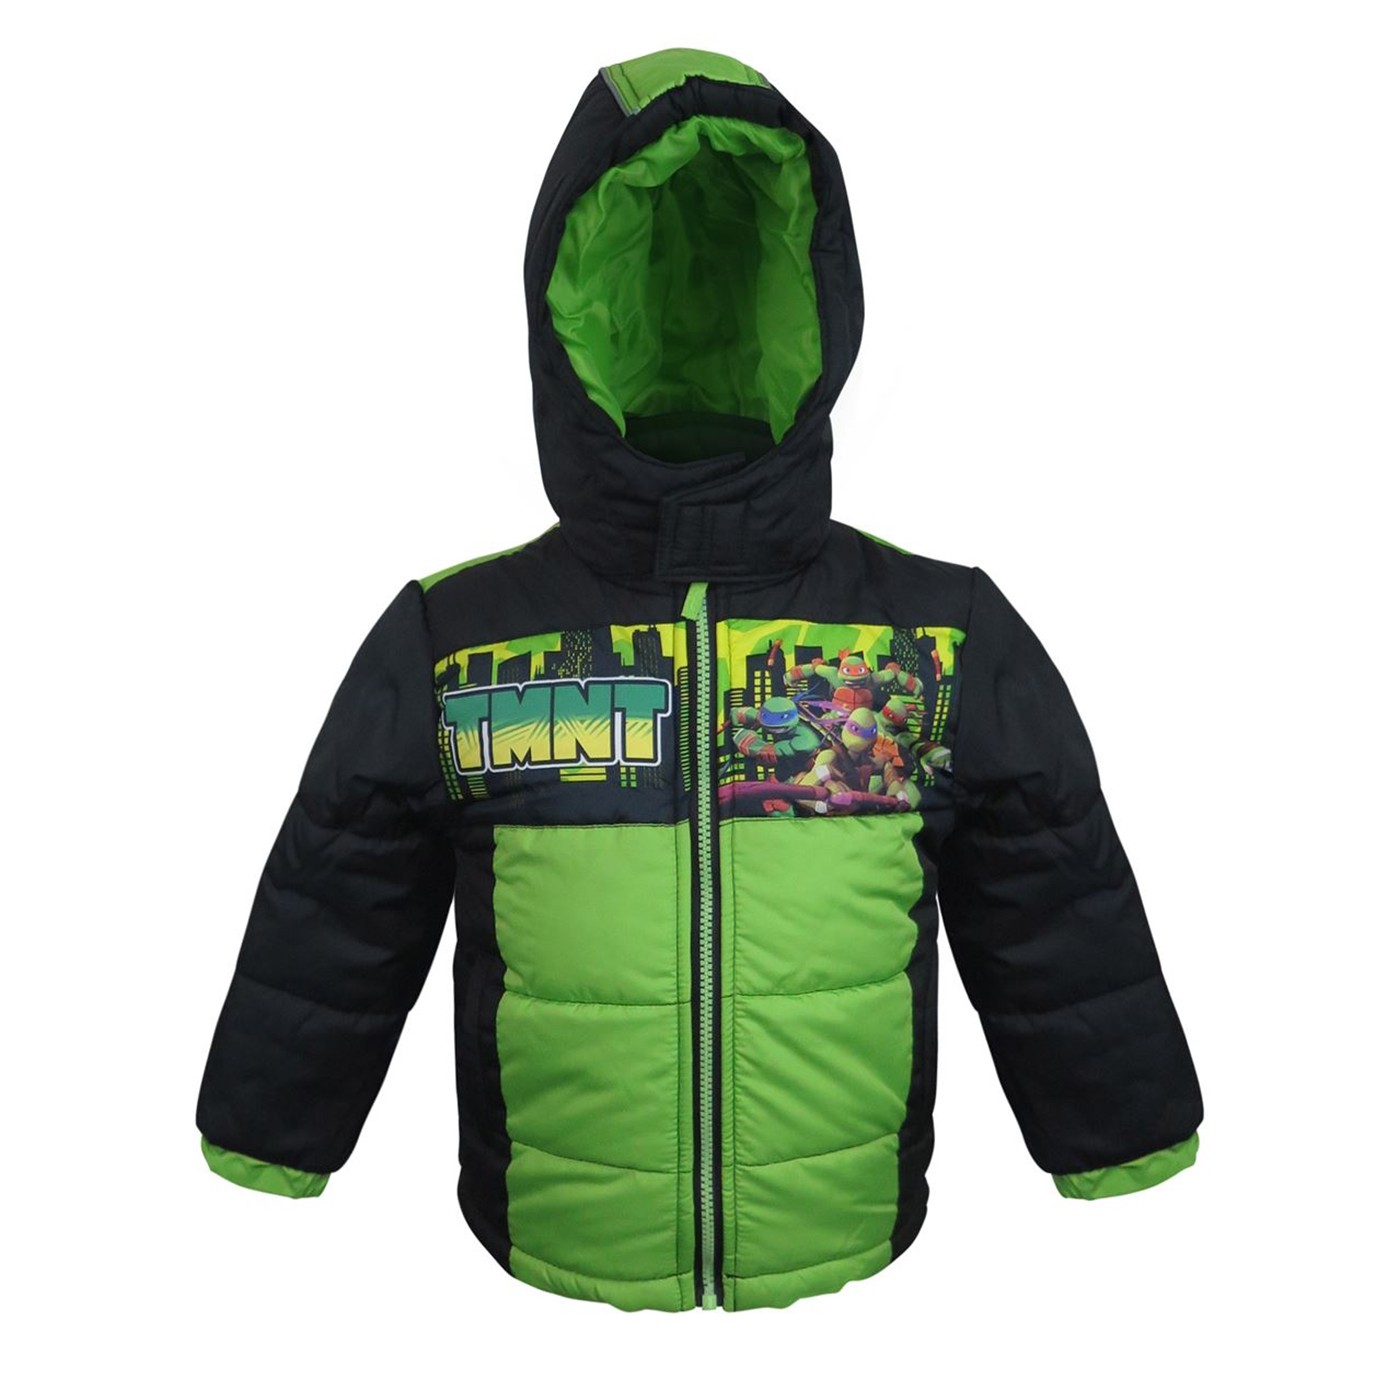 TMNT Kids Green Puffer Jacket